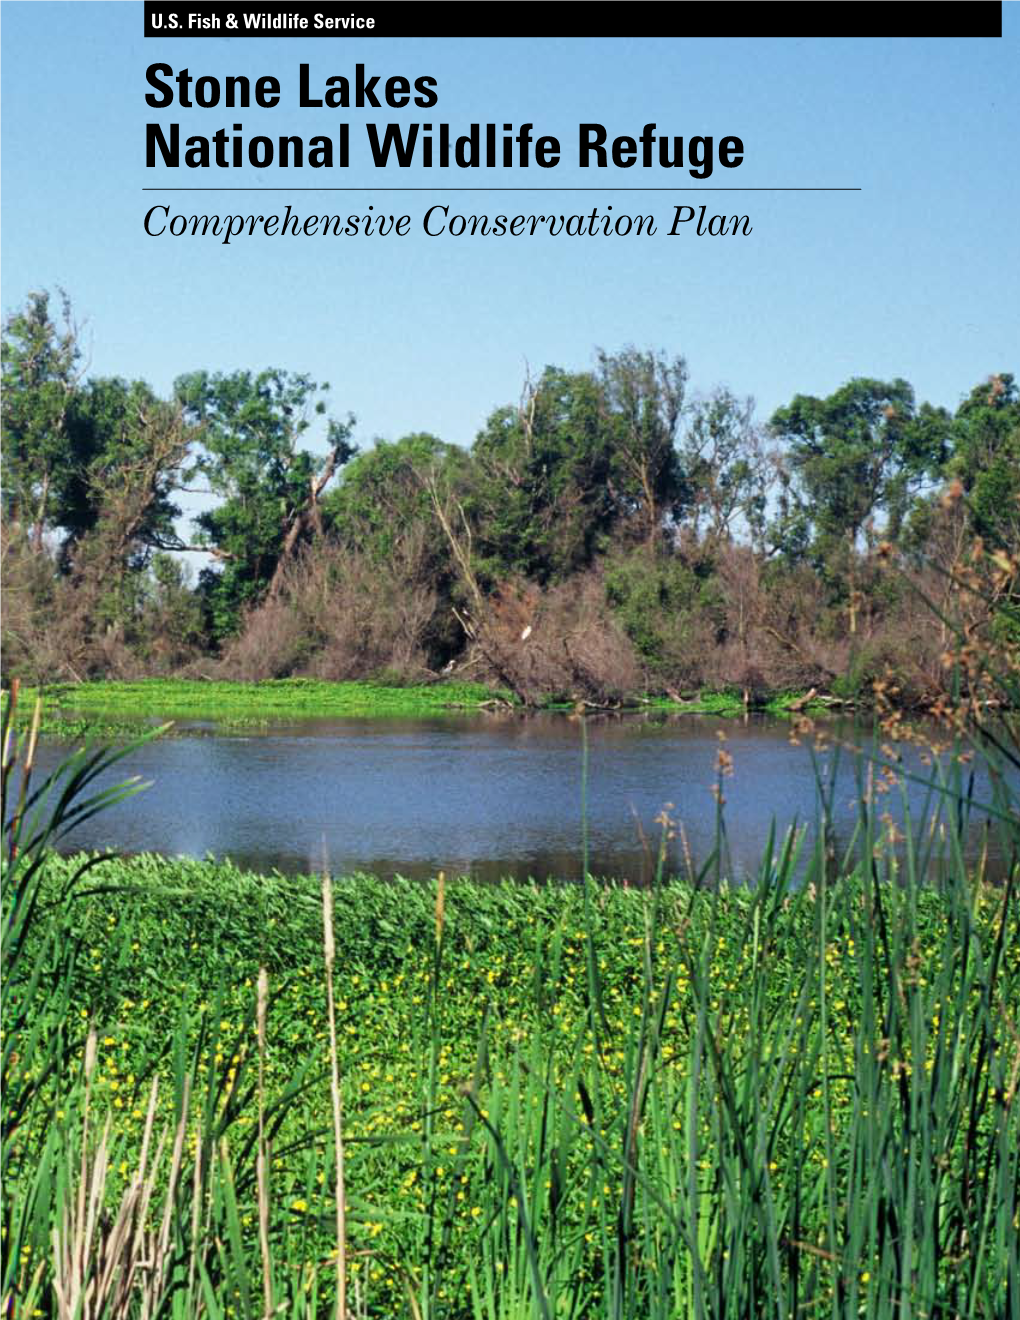 Stone Lakes National Wildlife Refuge Comprehensive Conservation Plan Vision Statement